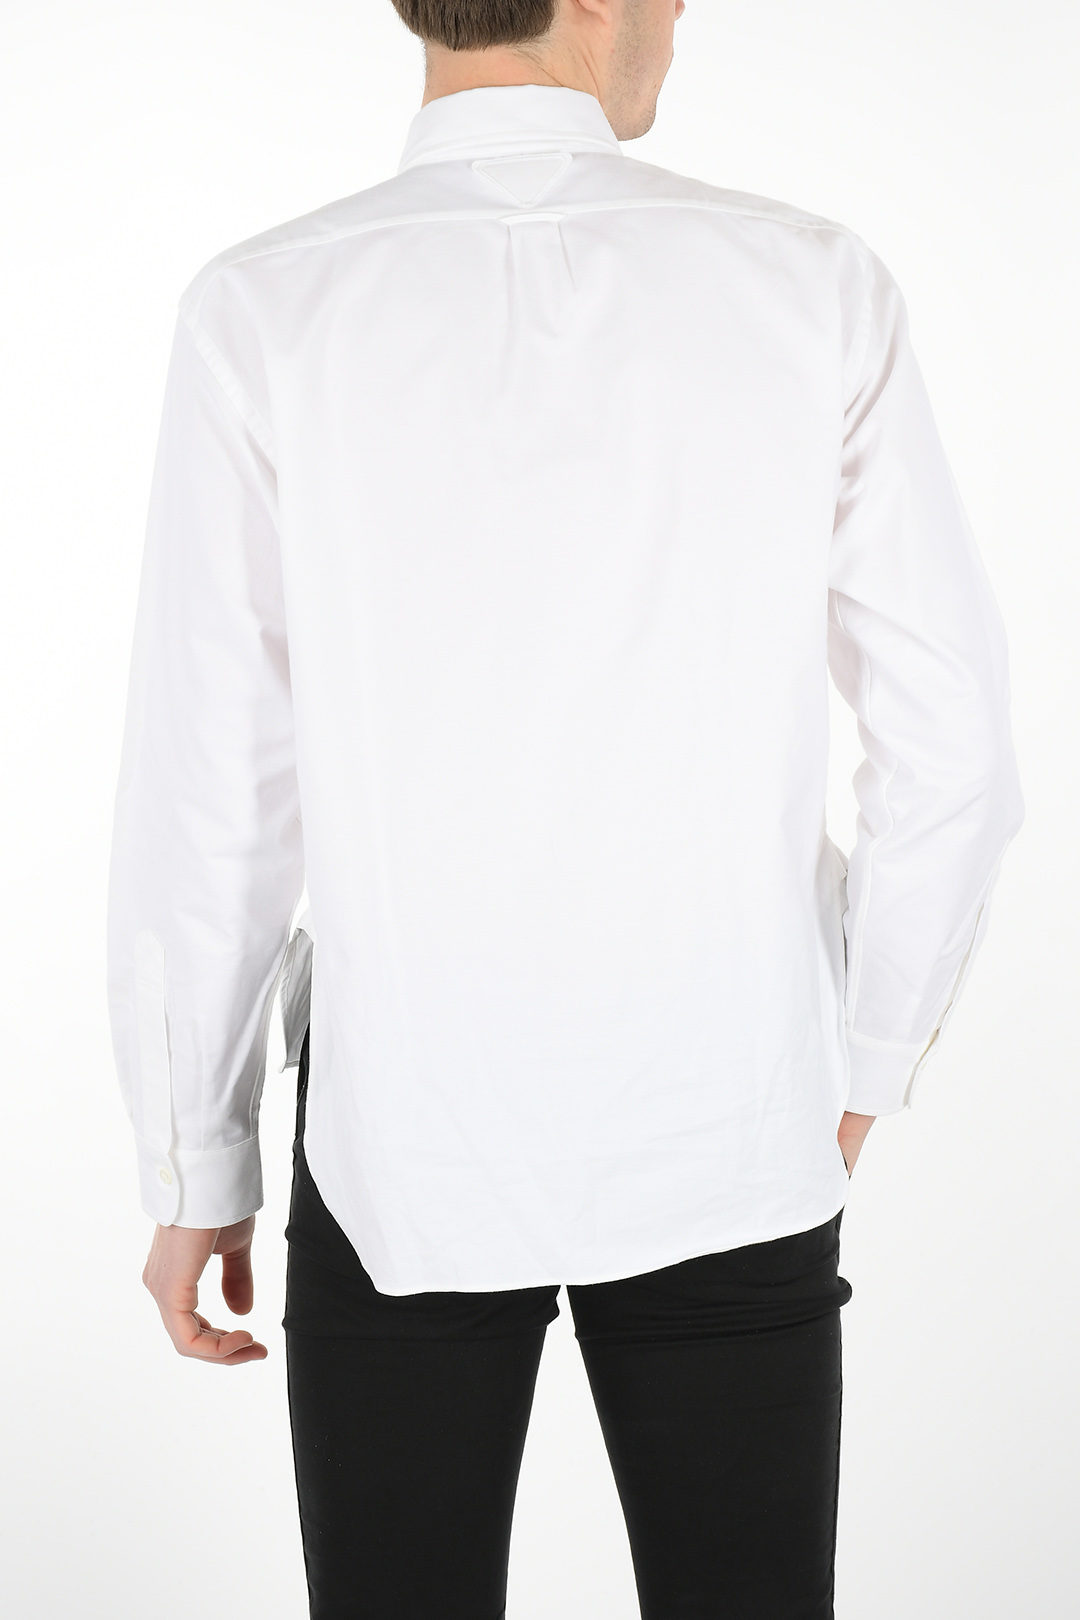 Prada Button Down Shirt with Pocket men - Glamood Outlet